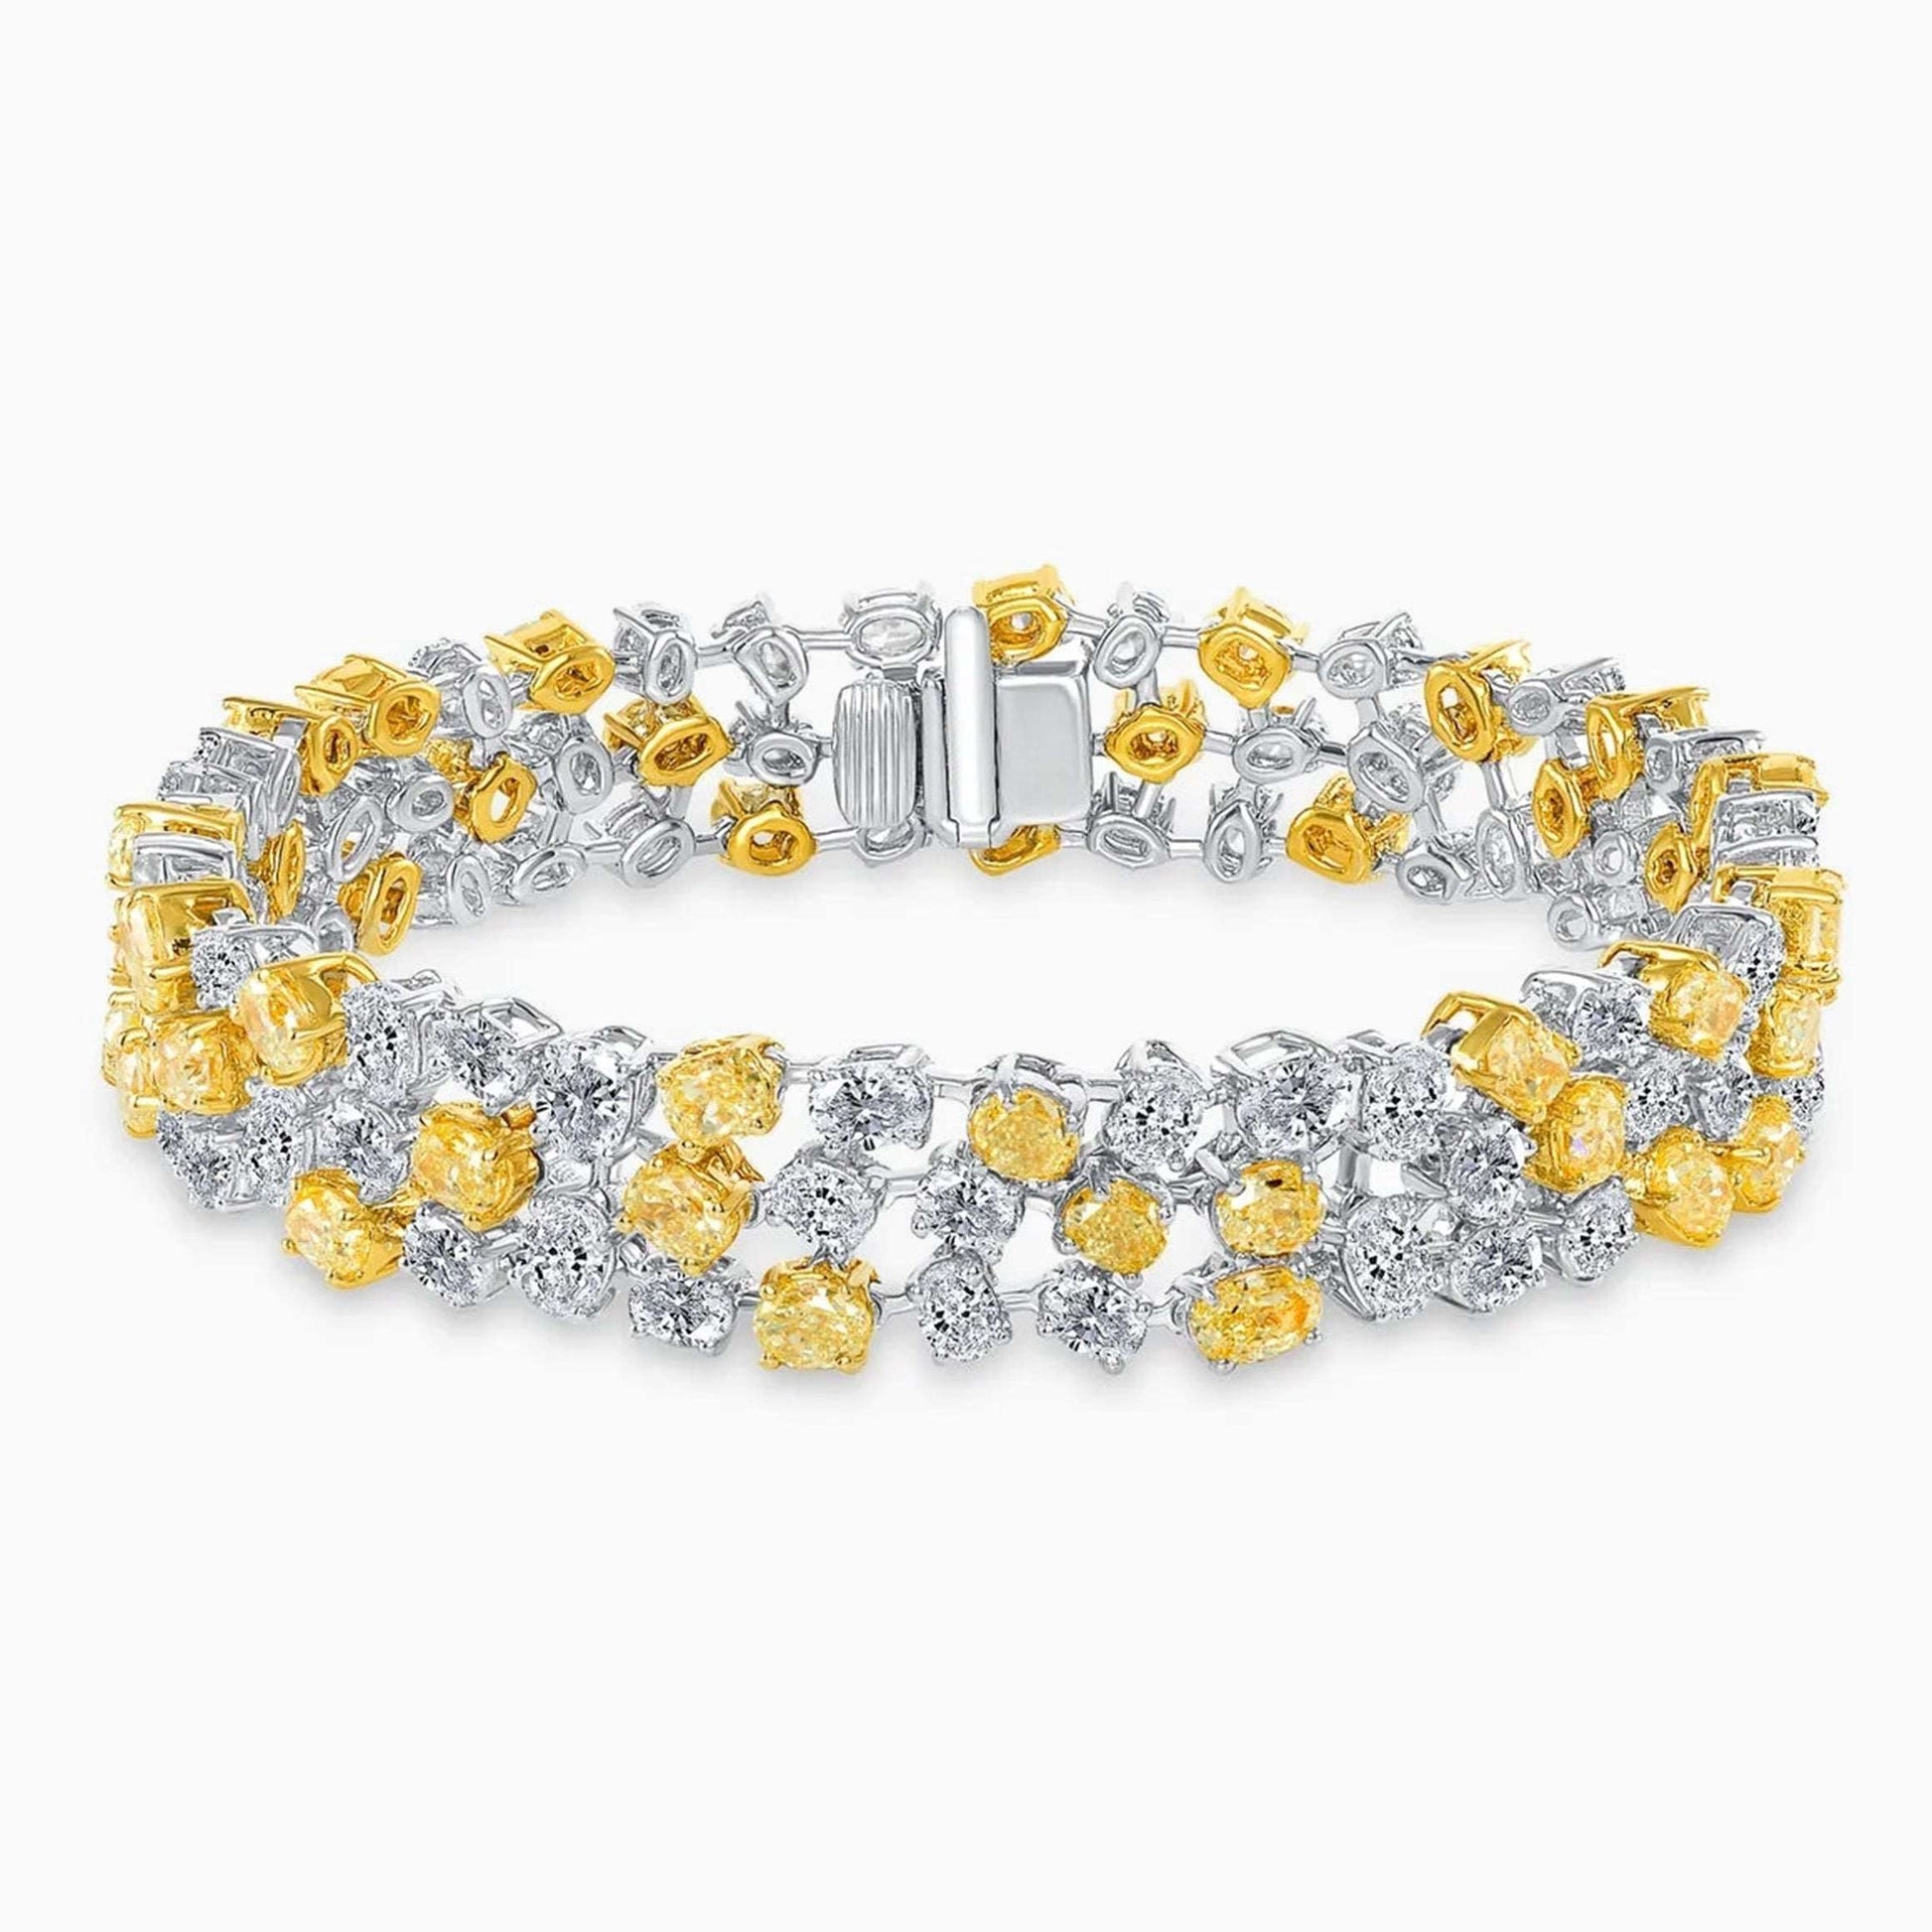 Fancy Yellow & White Diamonds Gold Bracelet on a white background